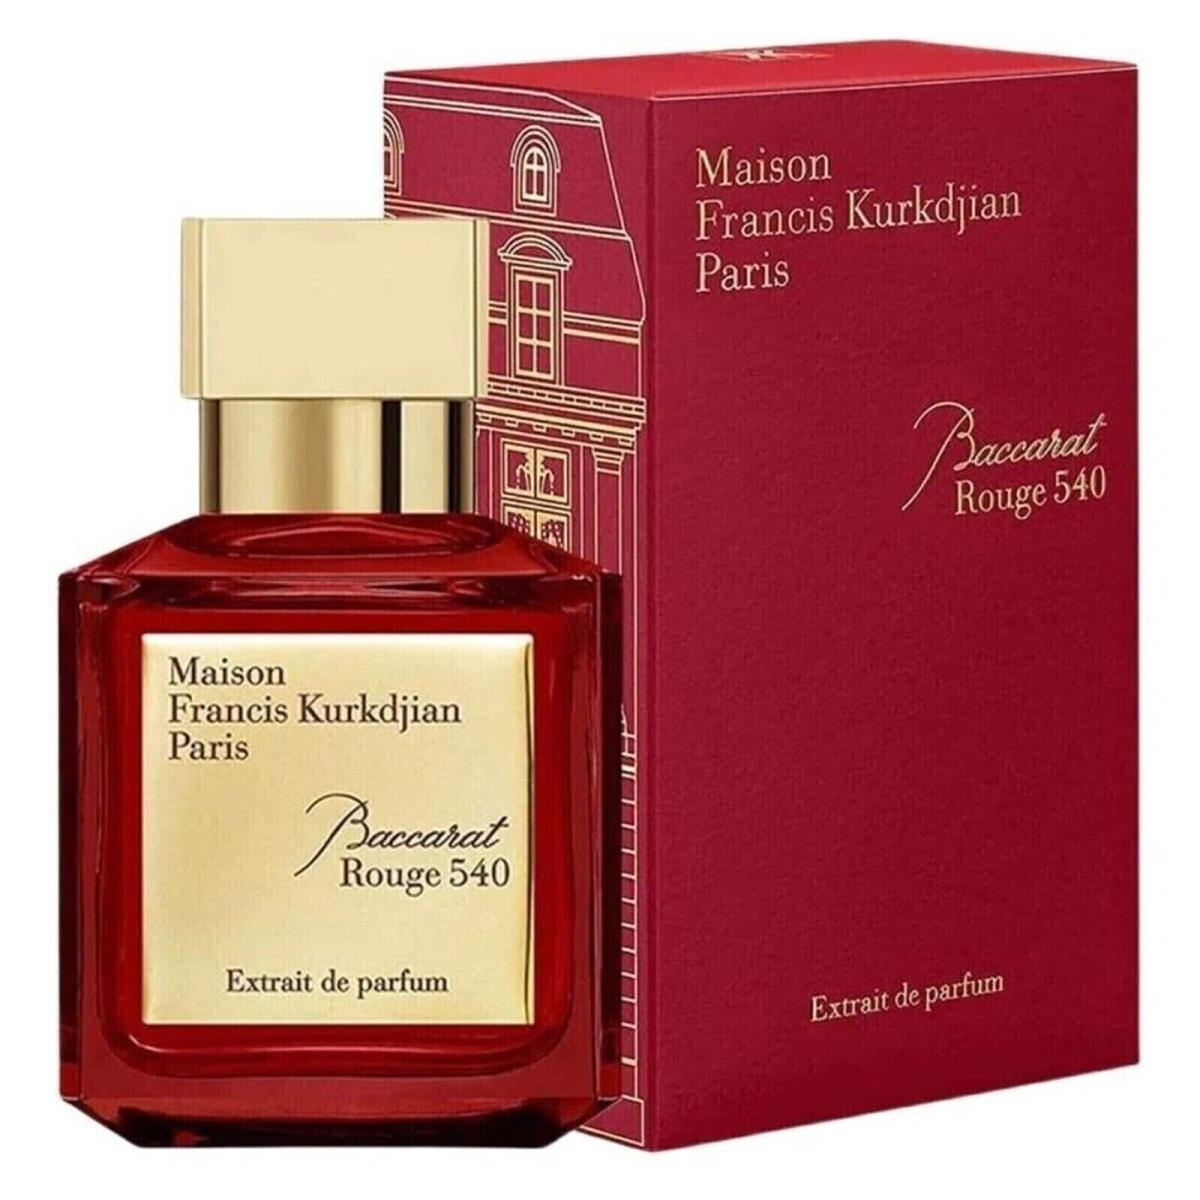 Maison Francis Kurkdjian Baccarat Rouge 540 Extrait de Parfum 2.4 fl oz Spray